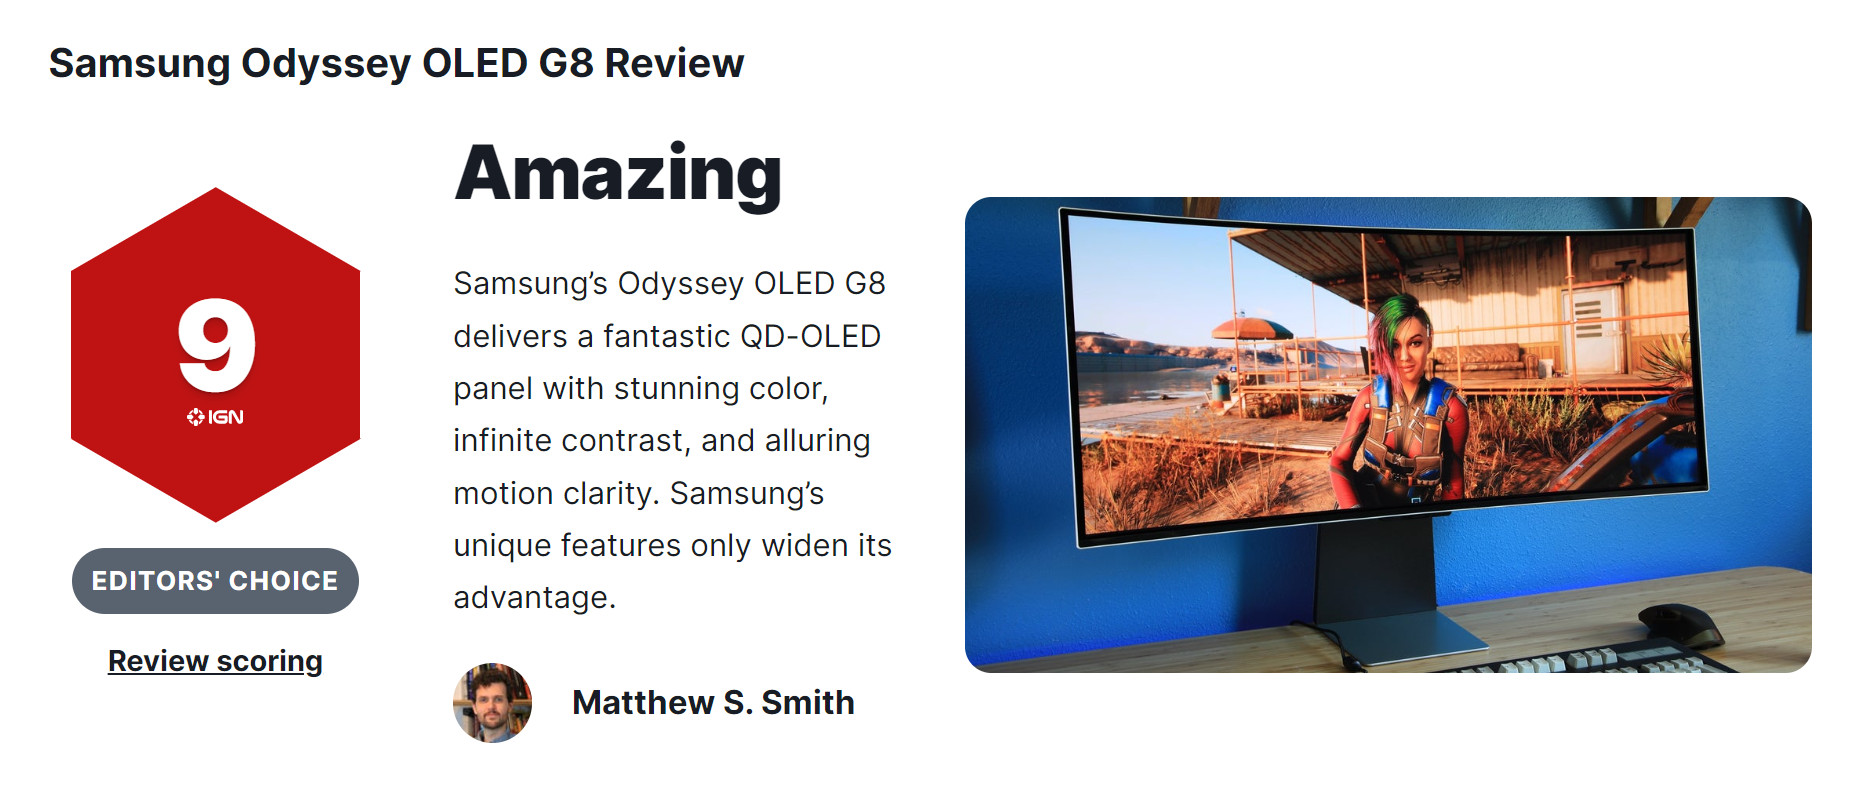 三星奥德赛OLED G8显示器获得IGN 9分评价